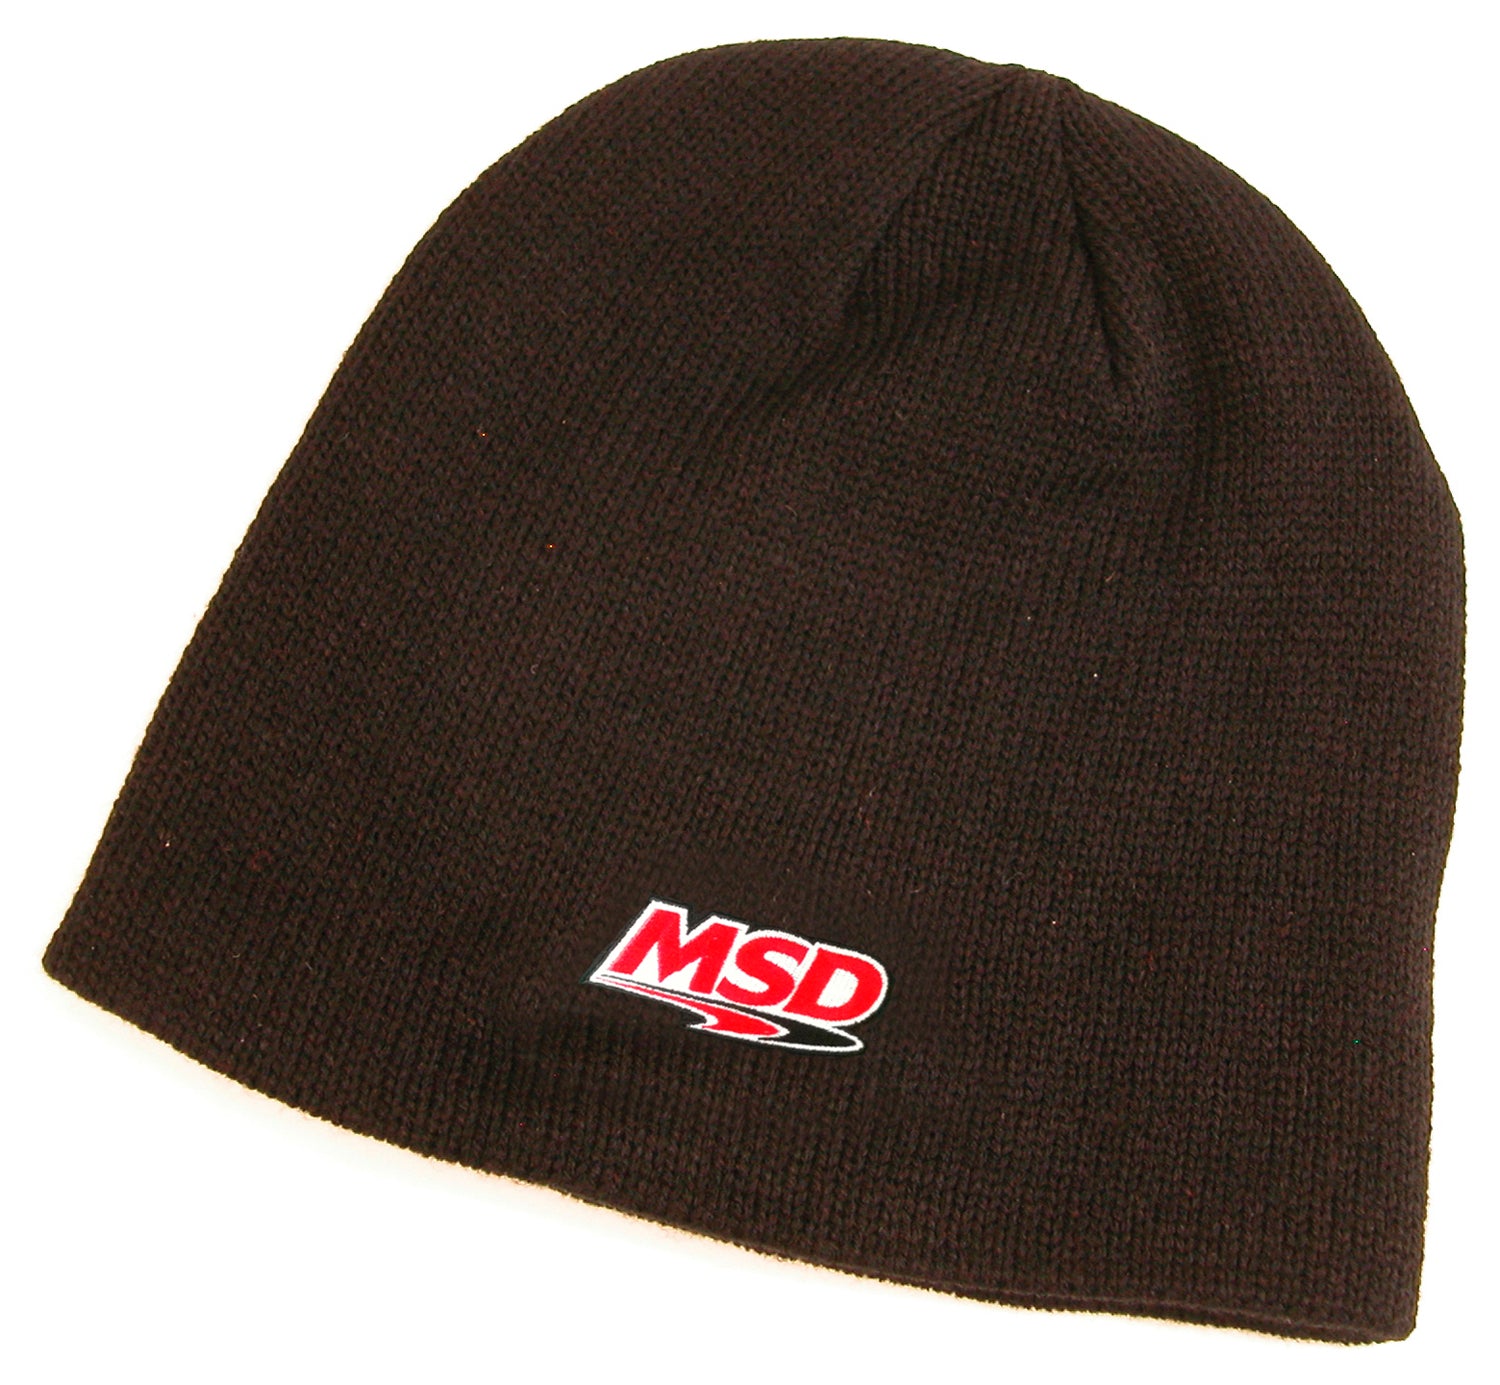 MSD Hat 93541